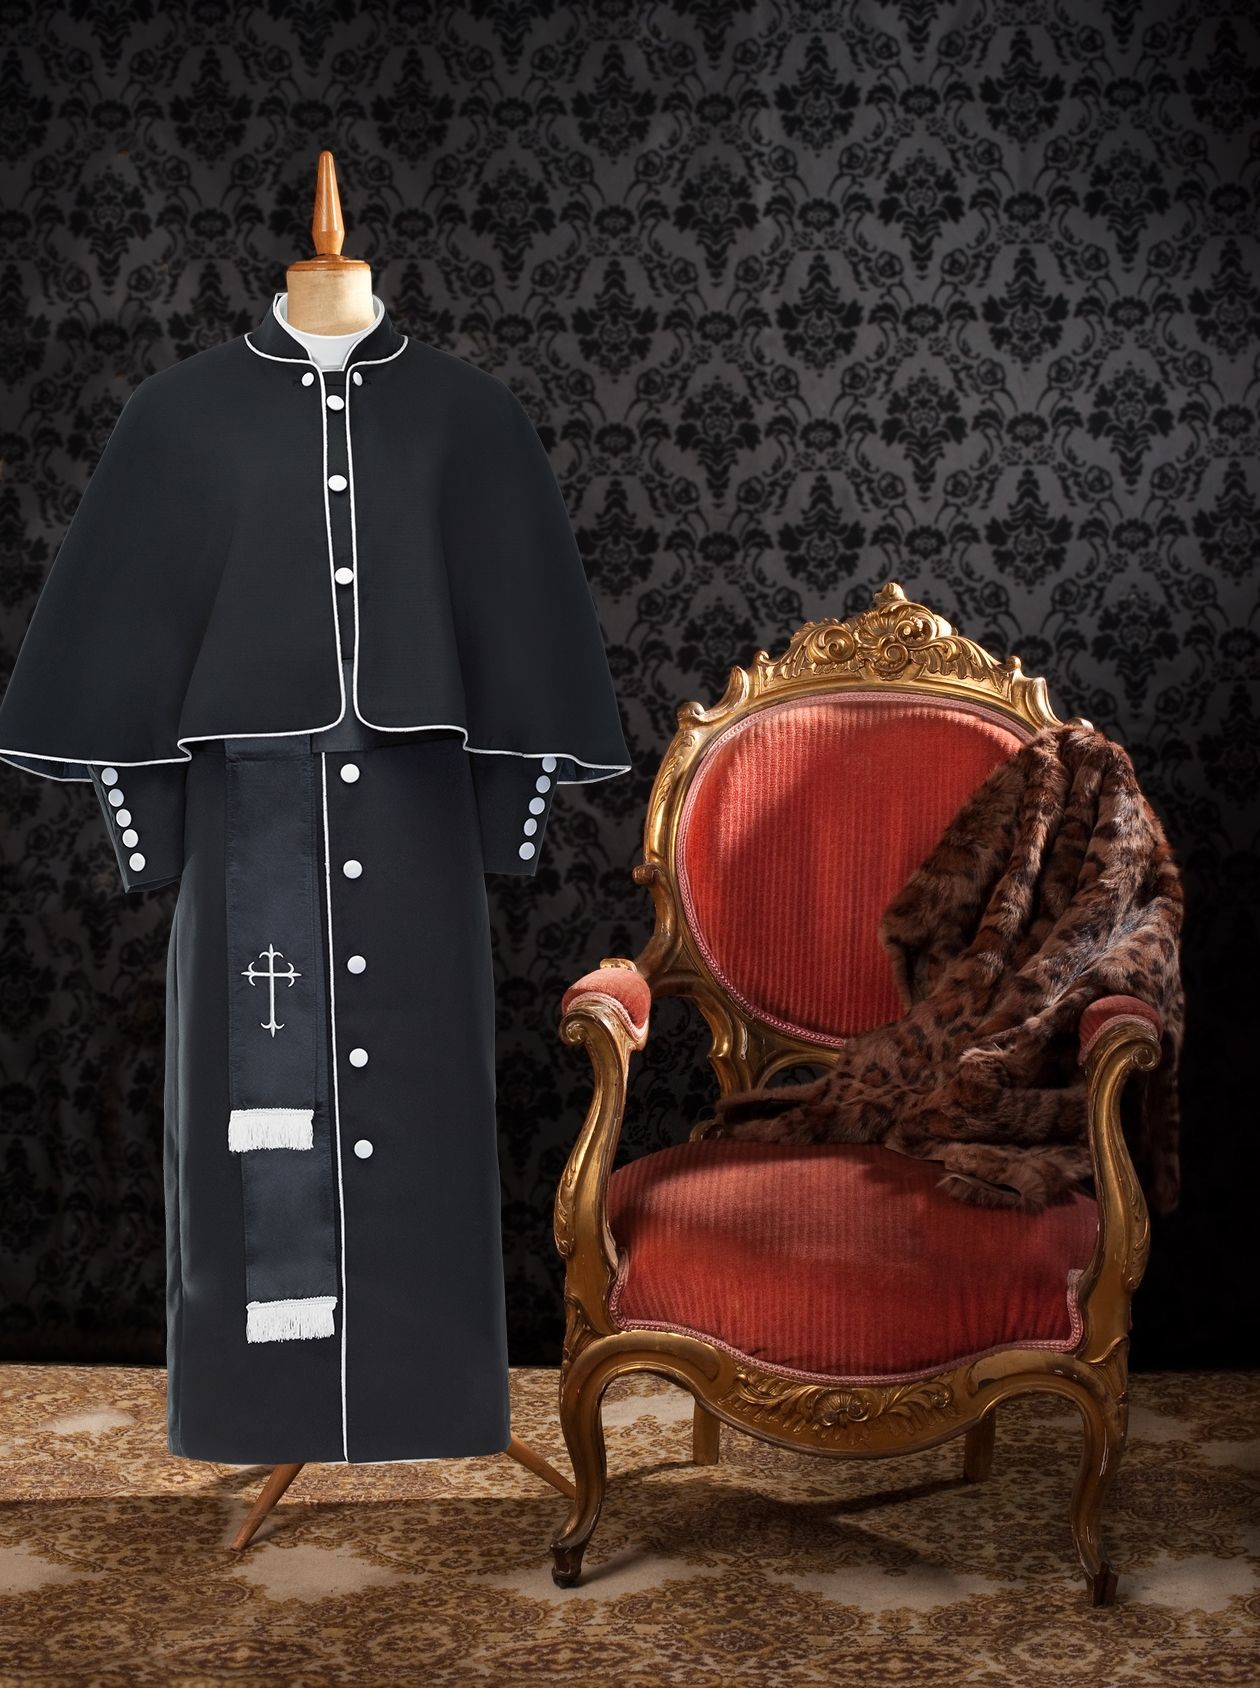 170 M. Men's Pastor/Clergy Robe Black/White Luxury Ensemble